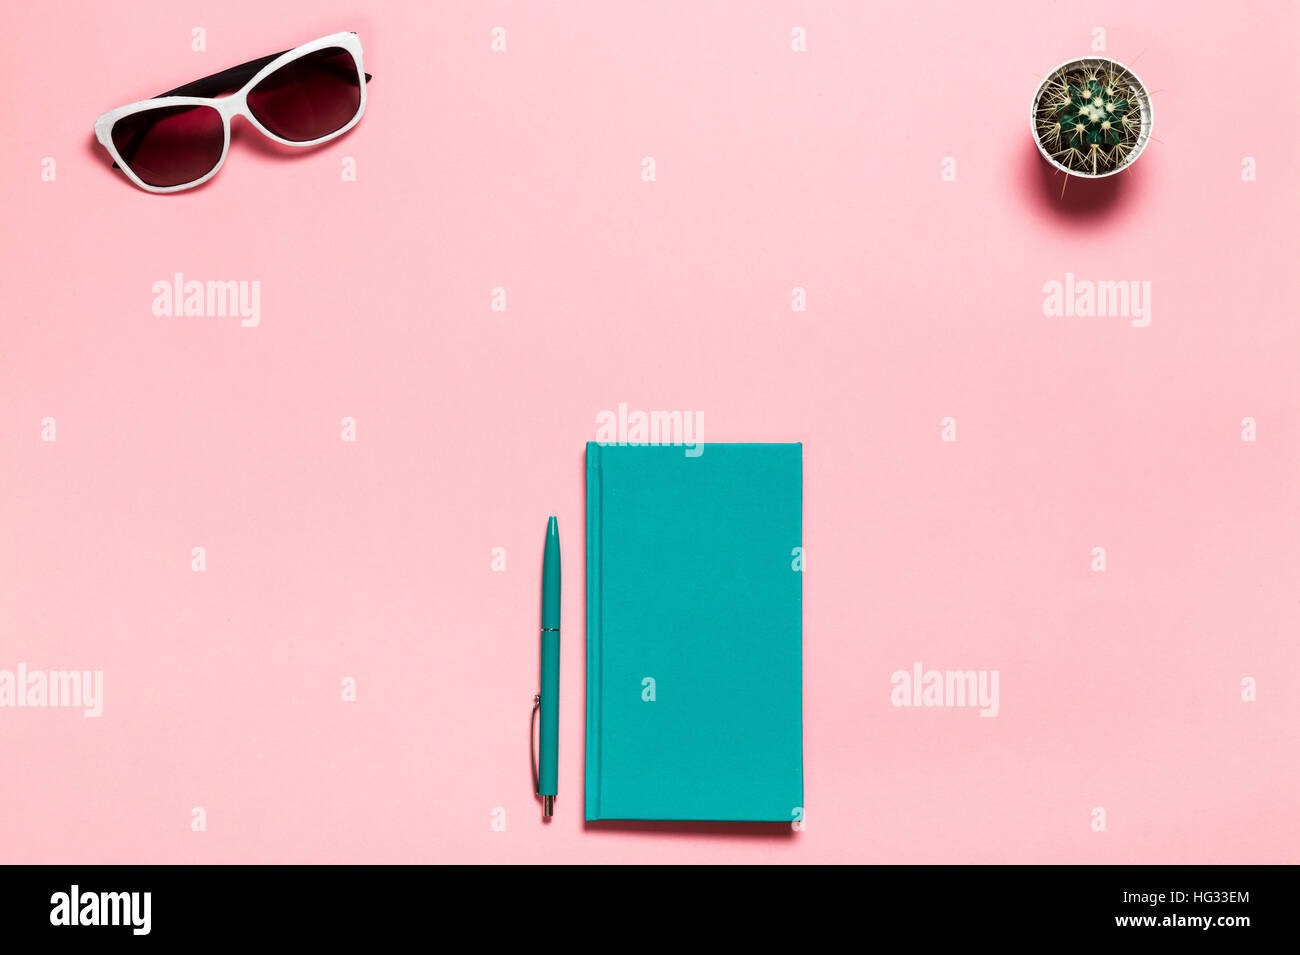 Creative flat lay photo of workspace desk with aquamarine notebook, eyeglasses, cactus copy space pink background, minimal style Stock Photo